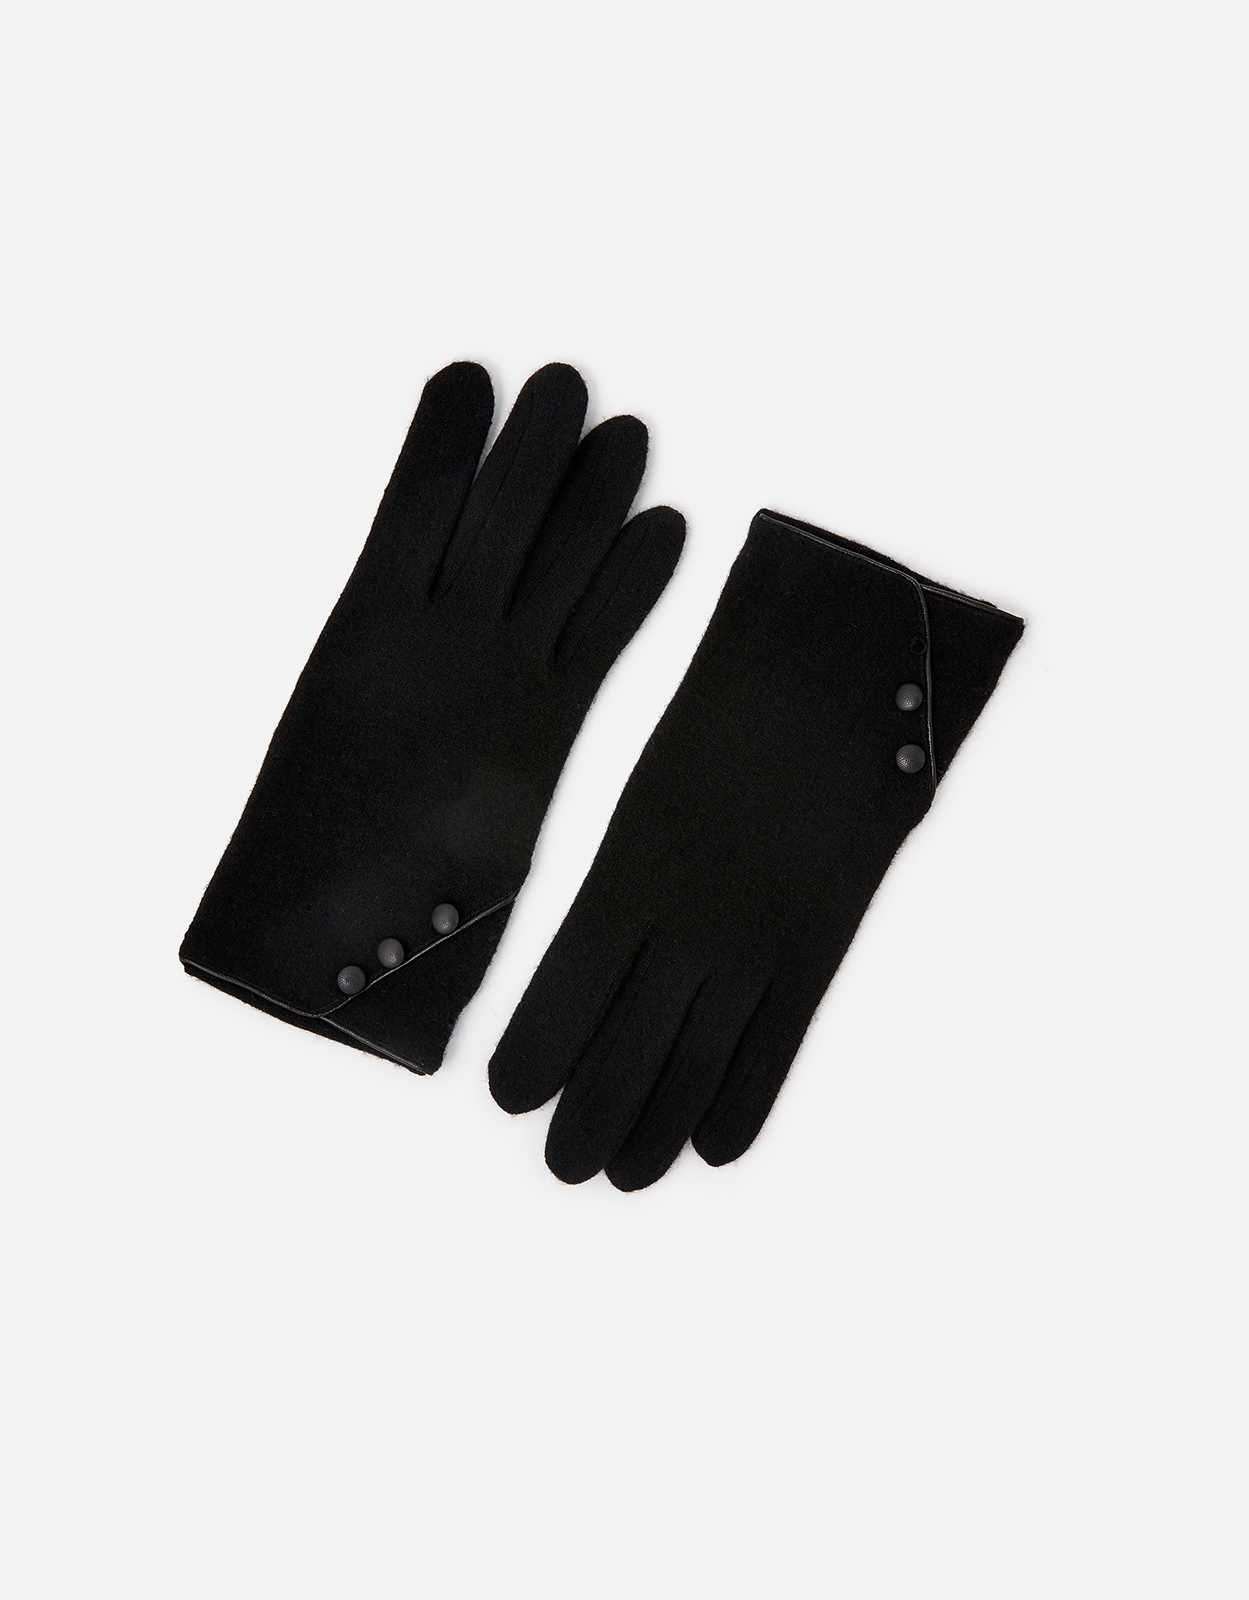 Accessorize Women's Black Wool Button Detail Gloves, Size: S / M